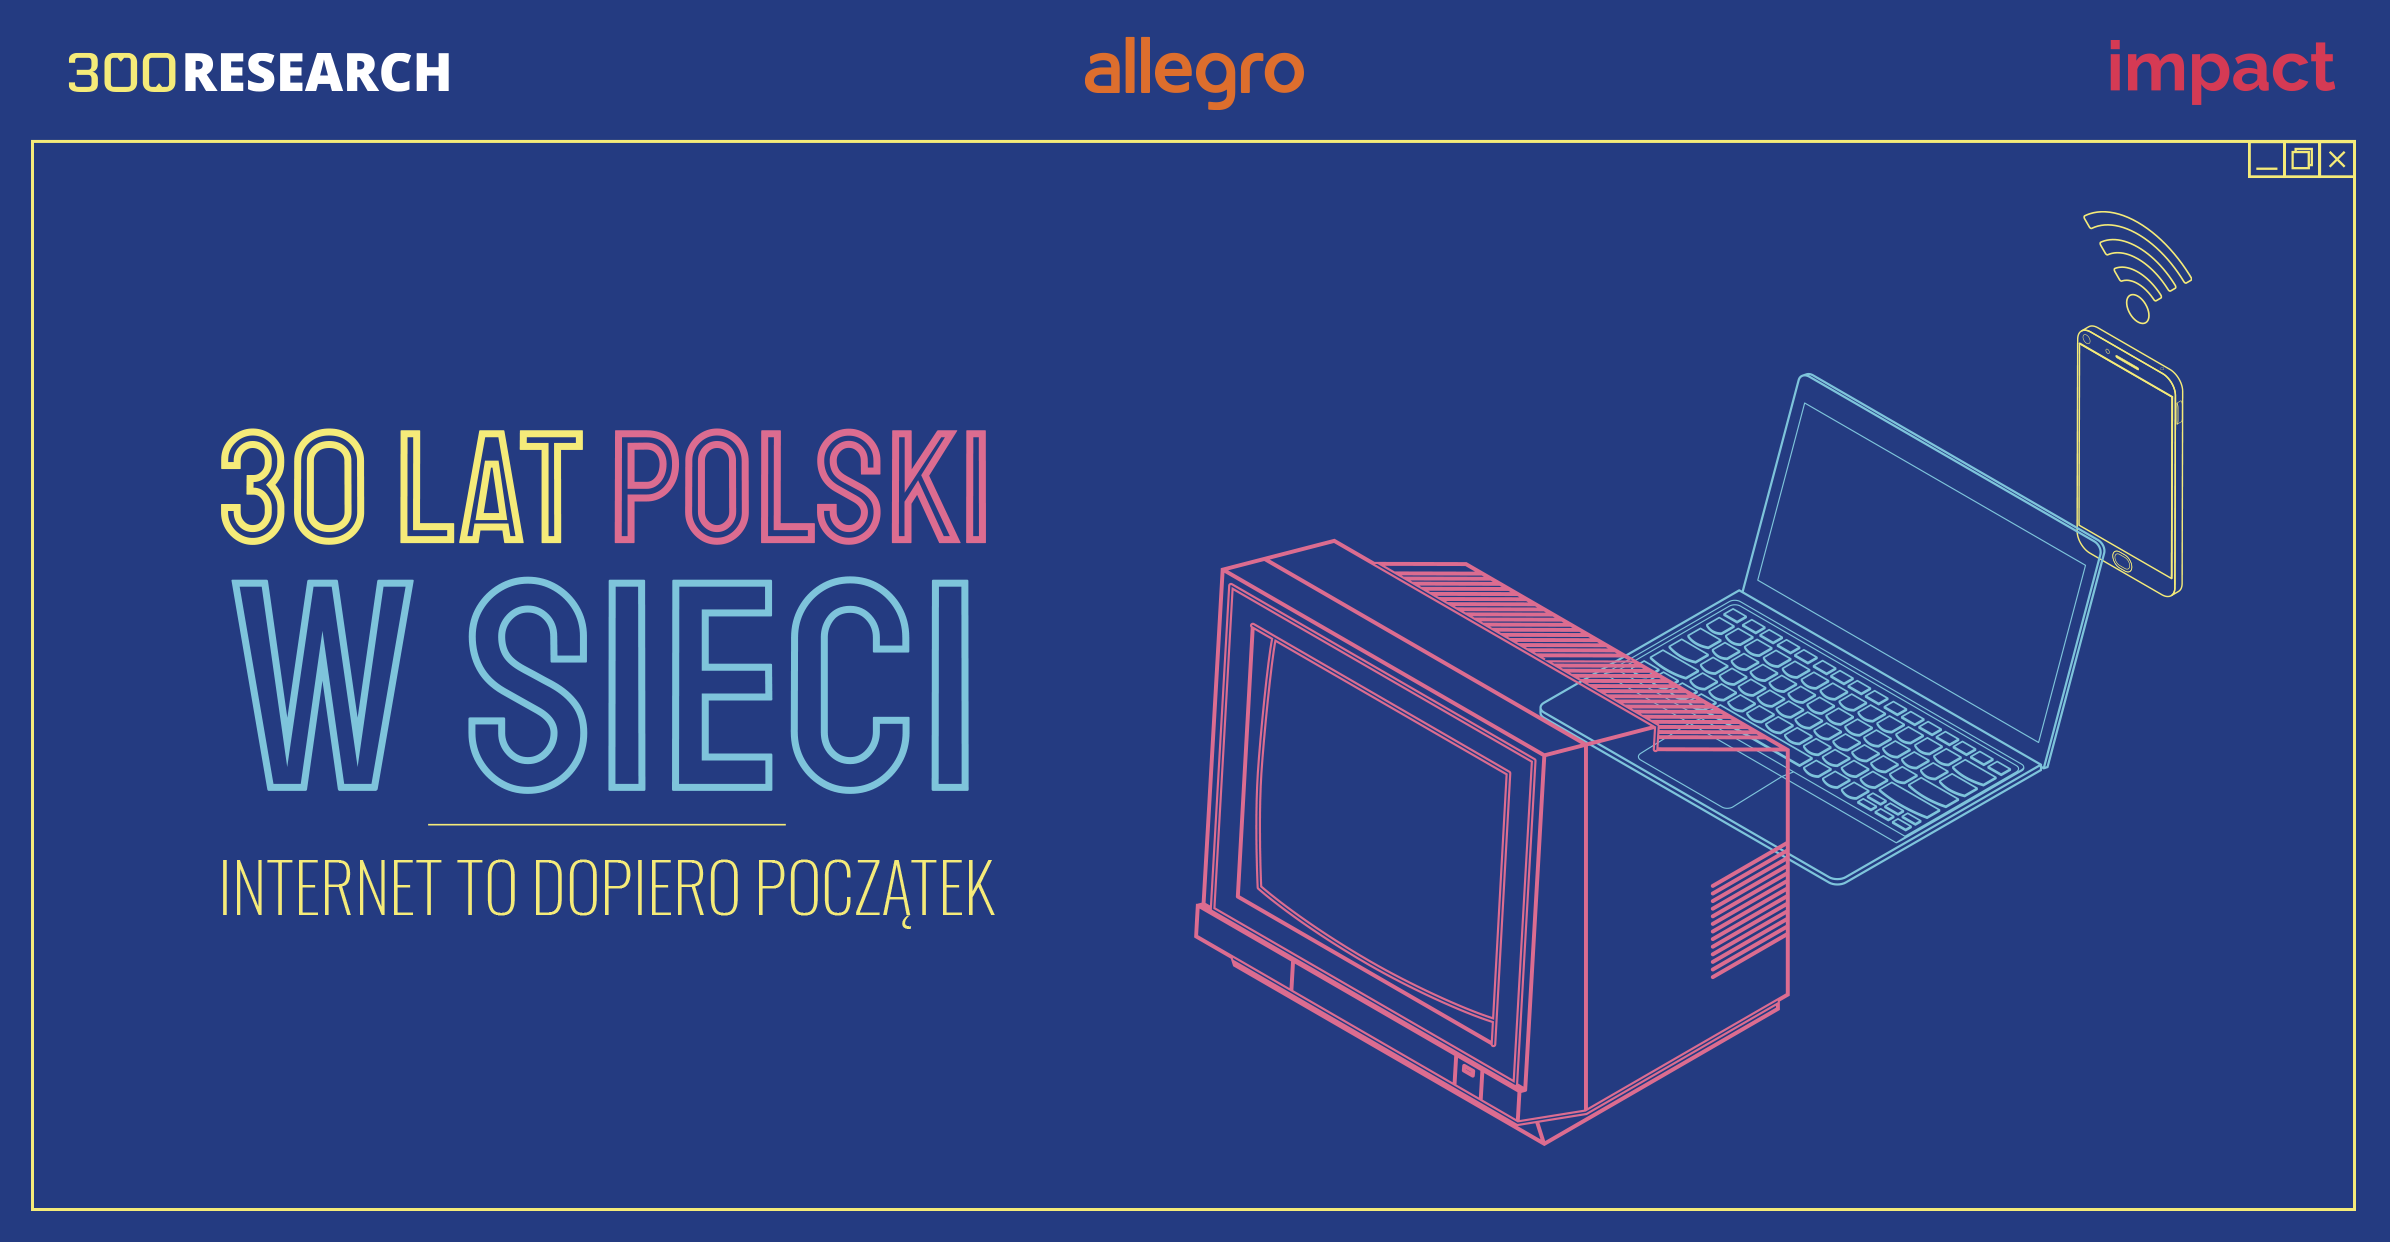 30 lat Polski w sieci - raport 300Research